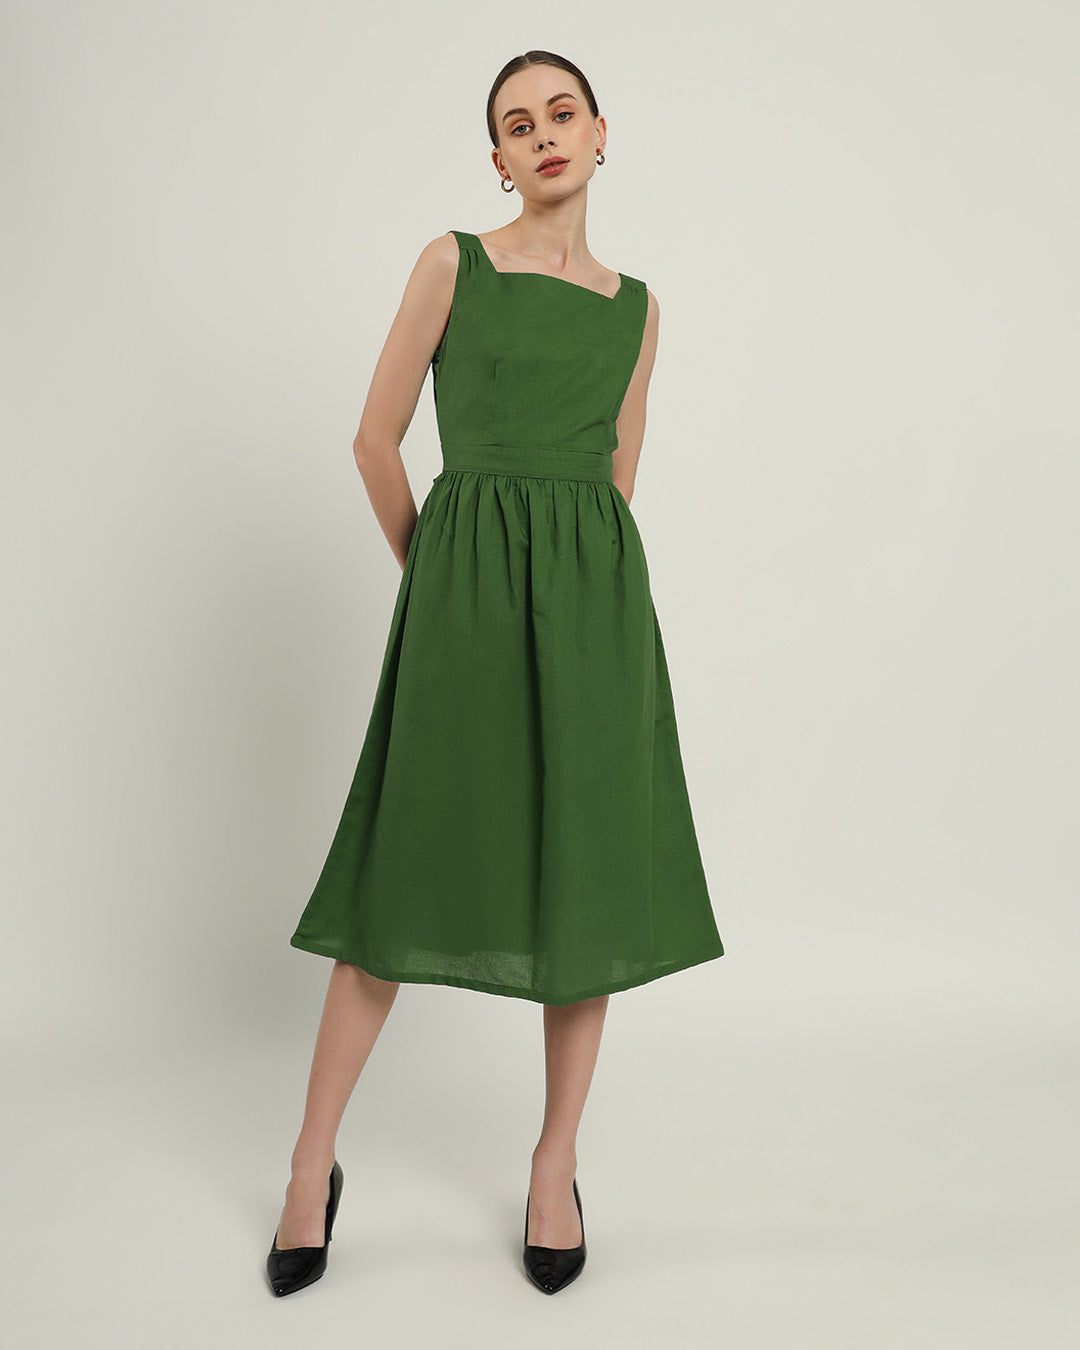 The Mihara Emerald Dress